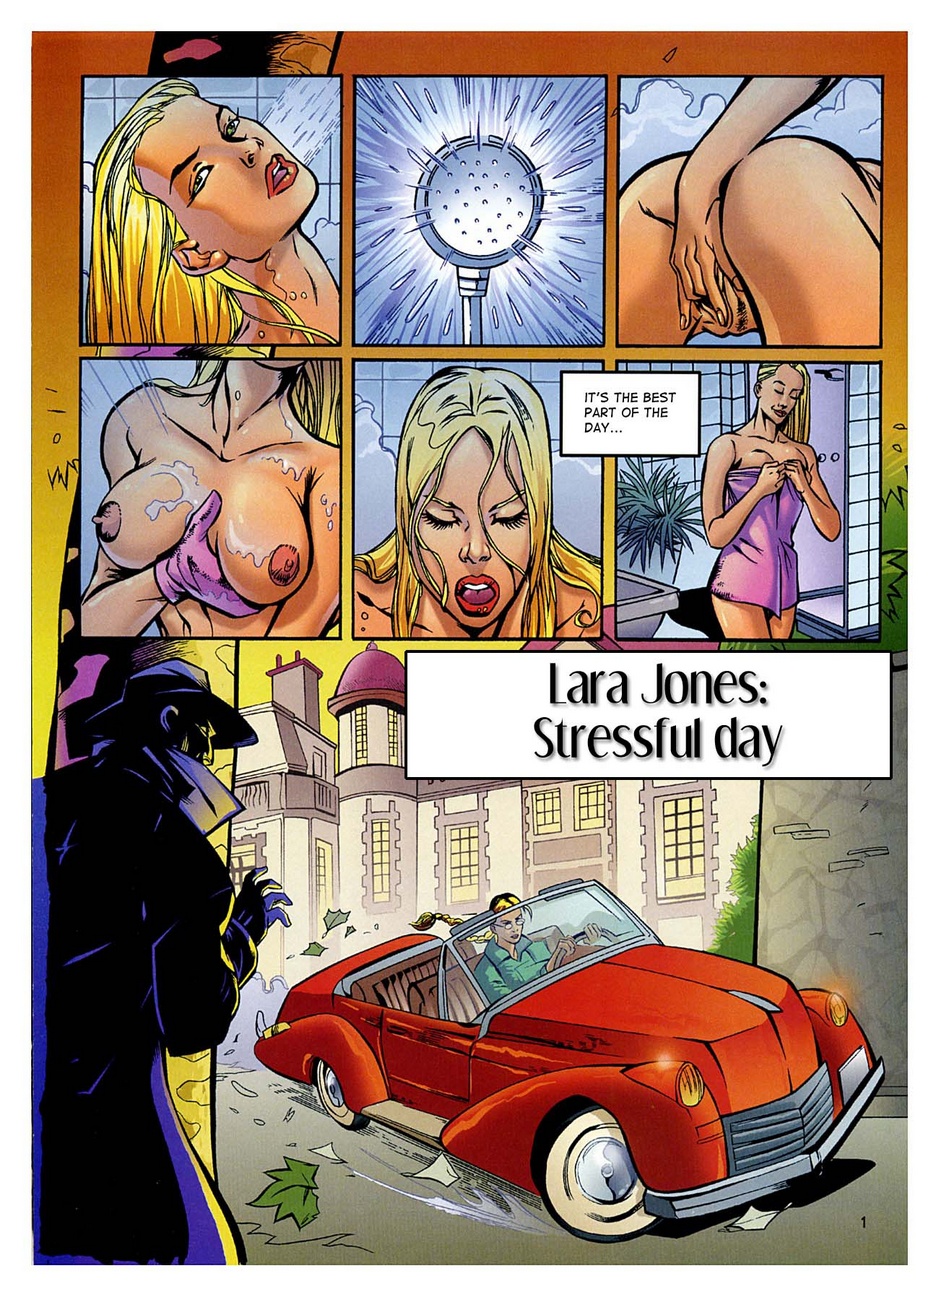 Lara Jones stressant jour